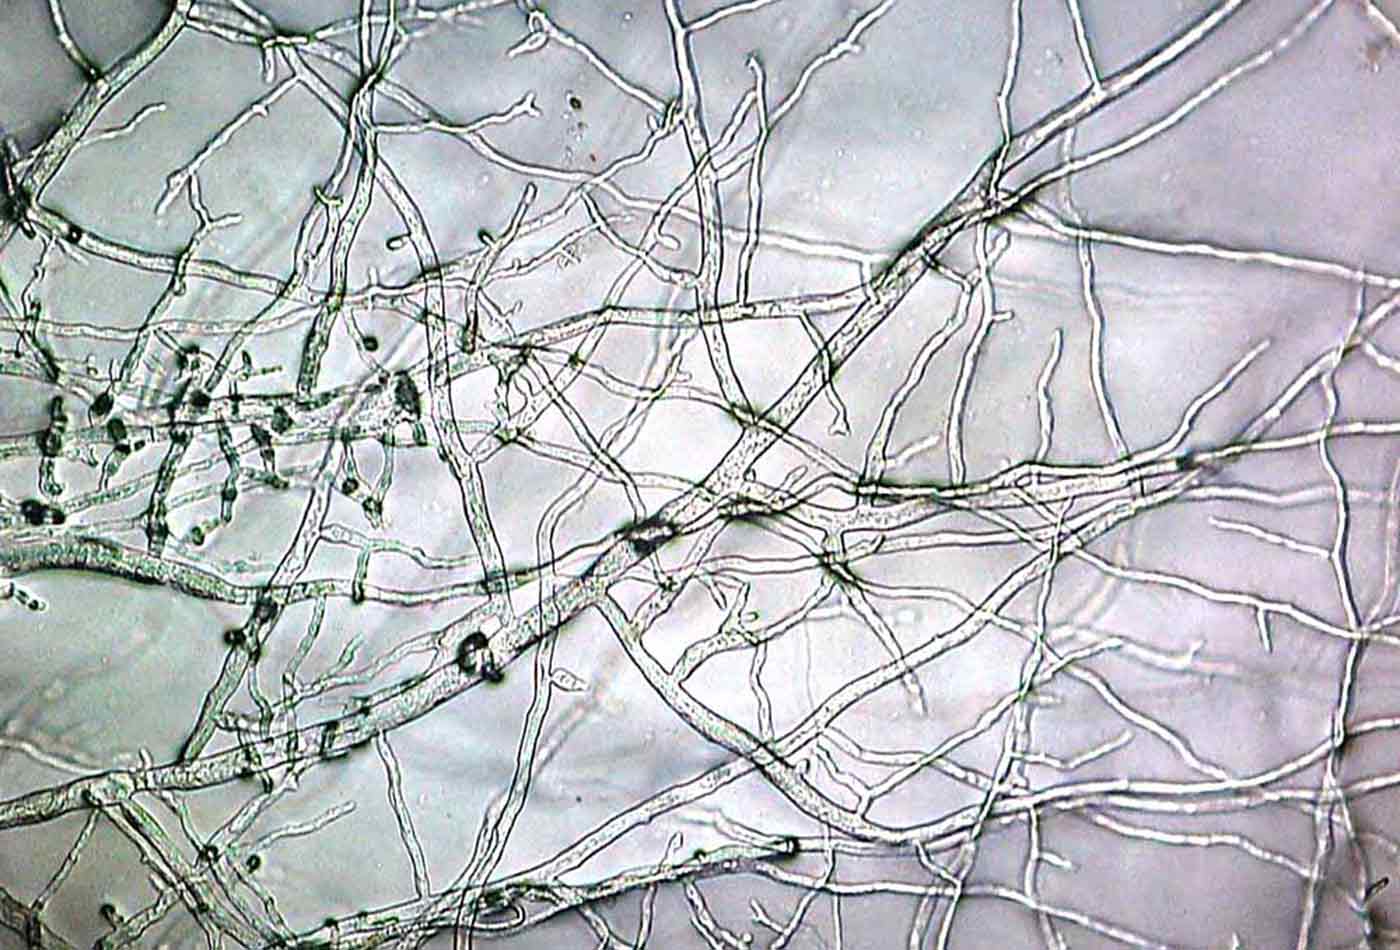 Mycelium under a microscope.